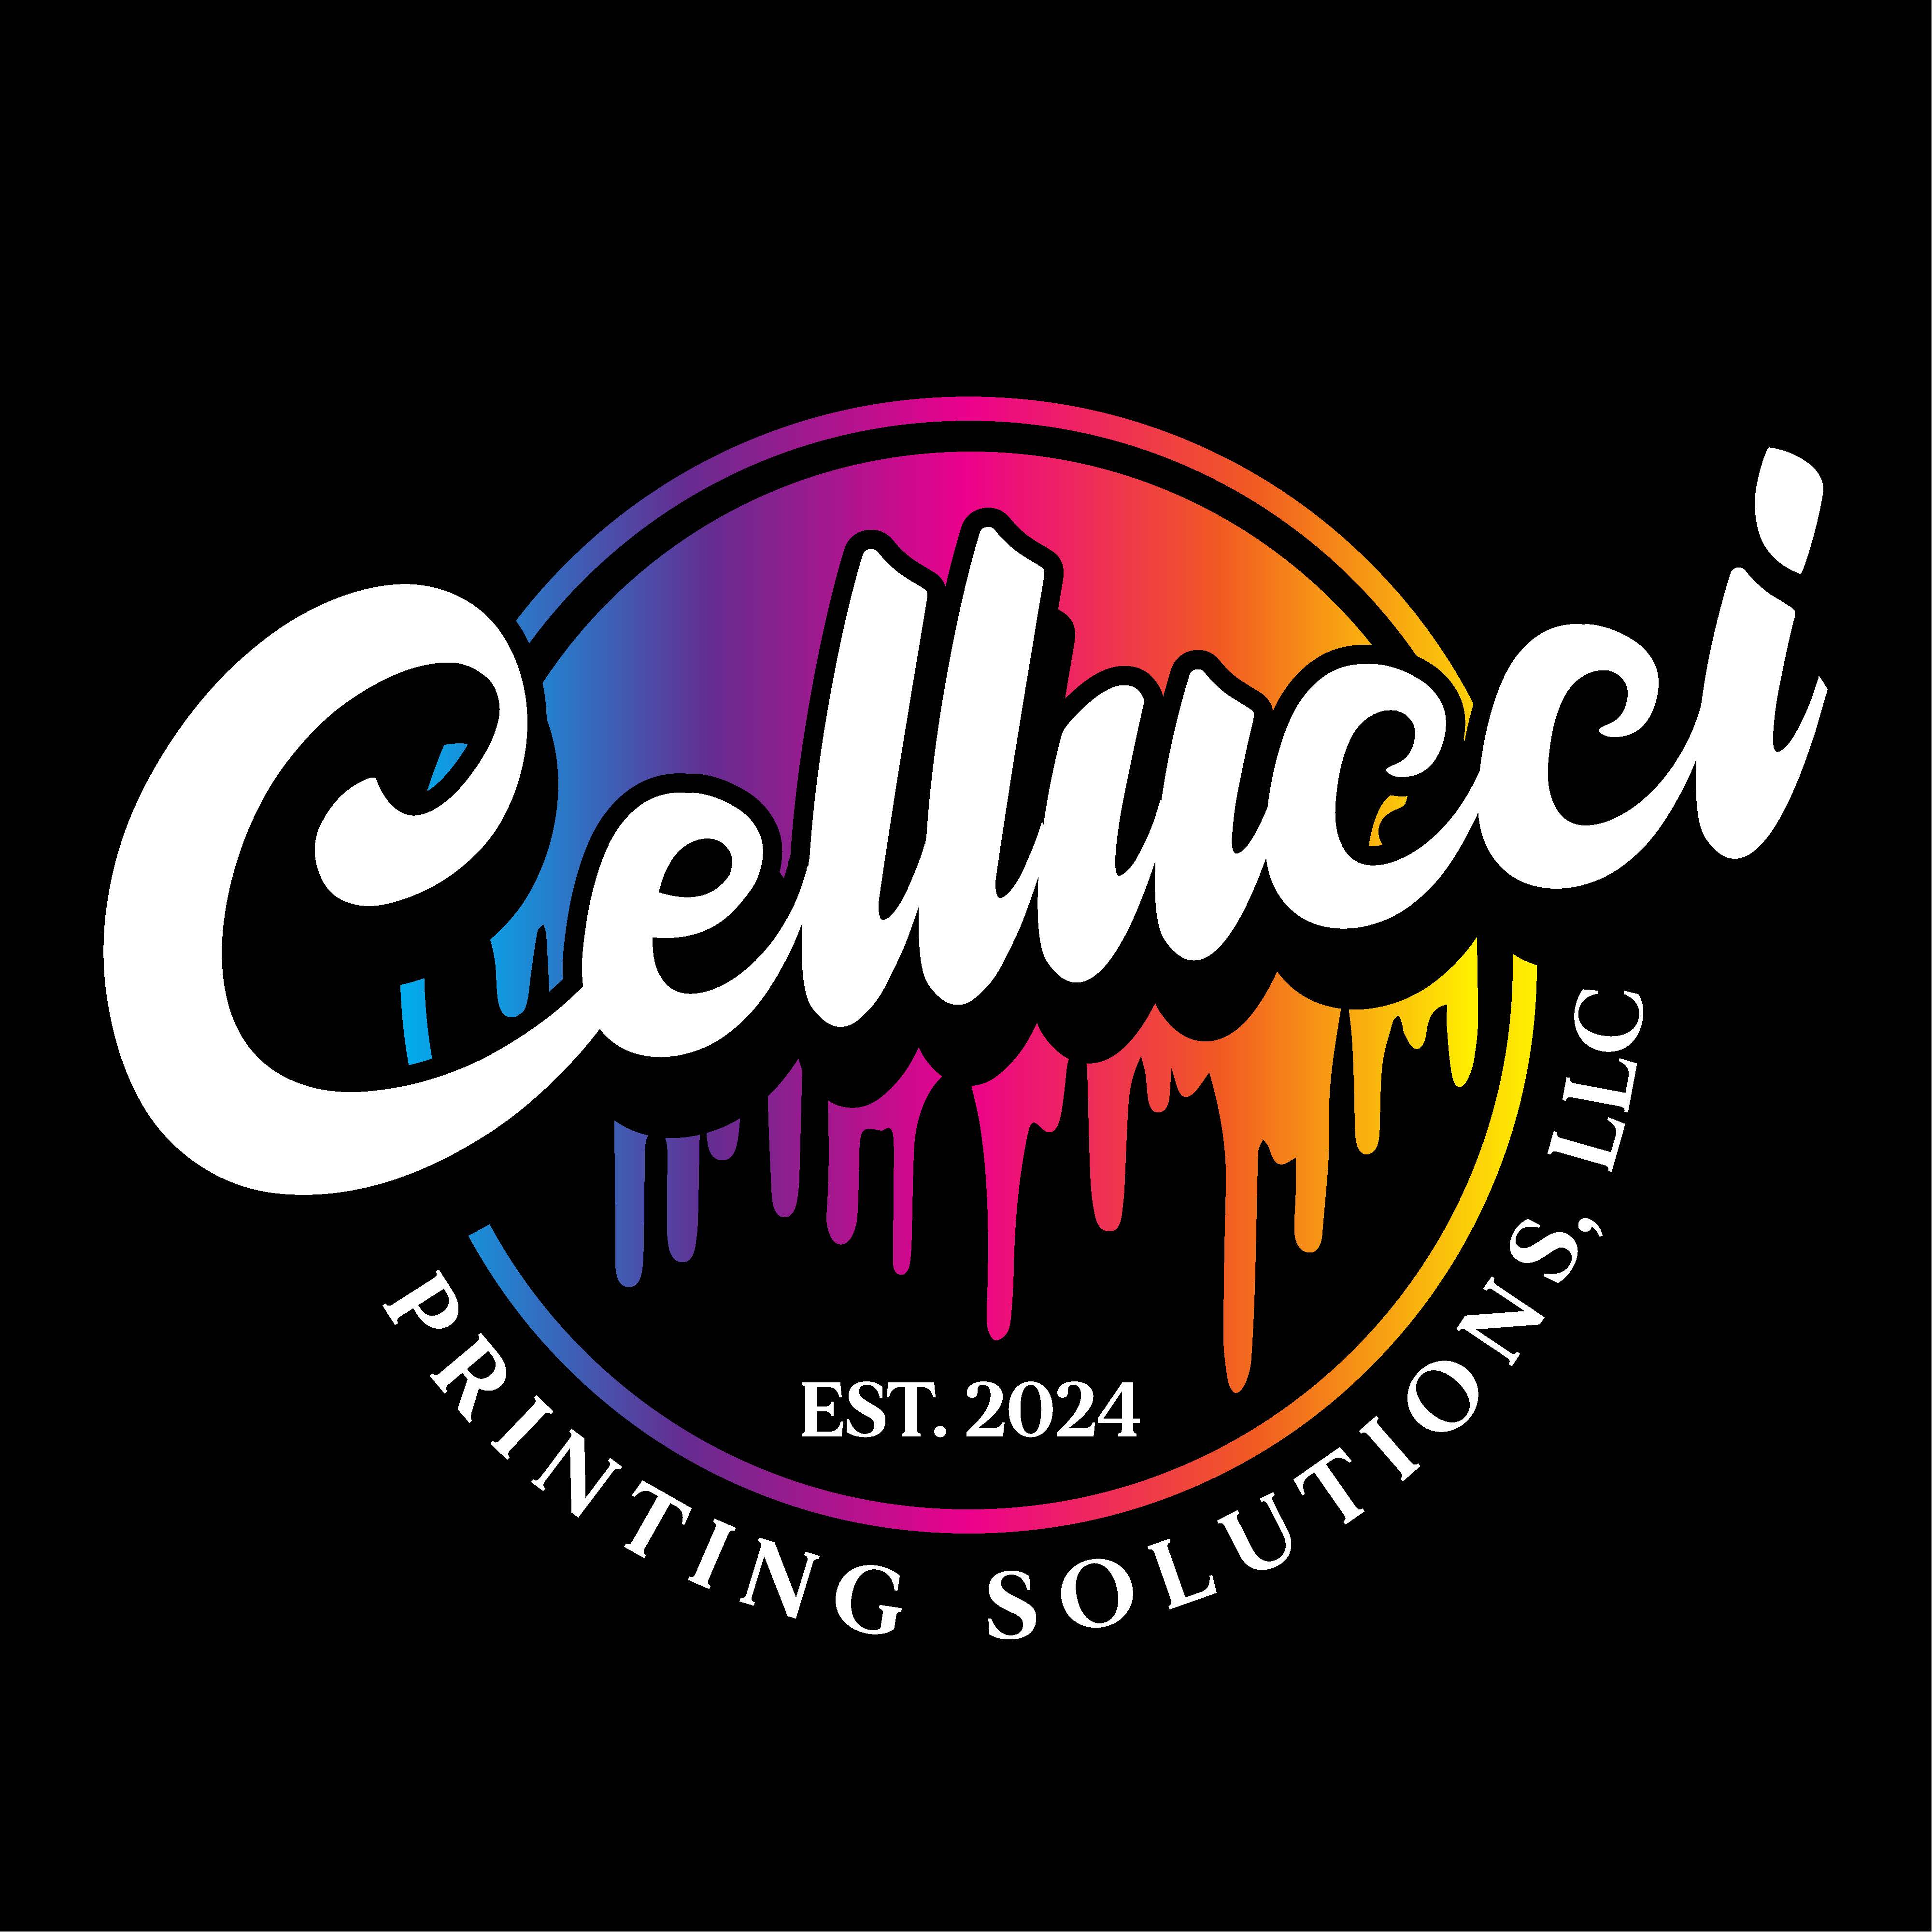 Cellucci Printing Solutions, LLC